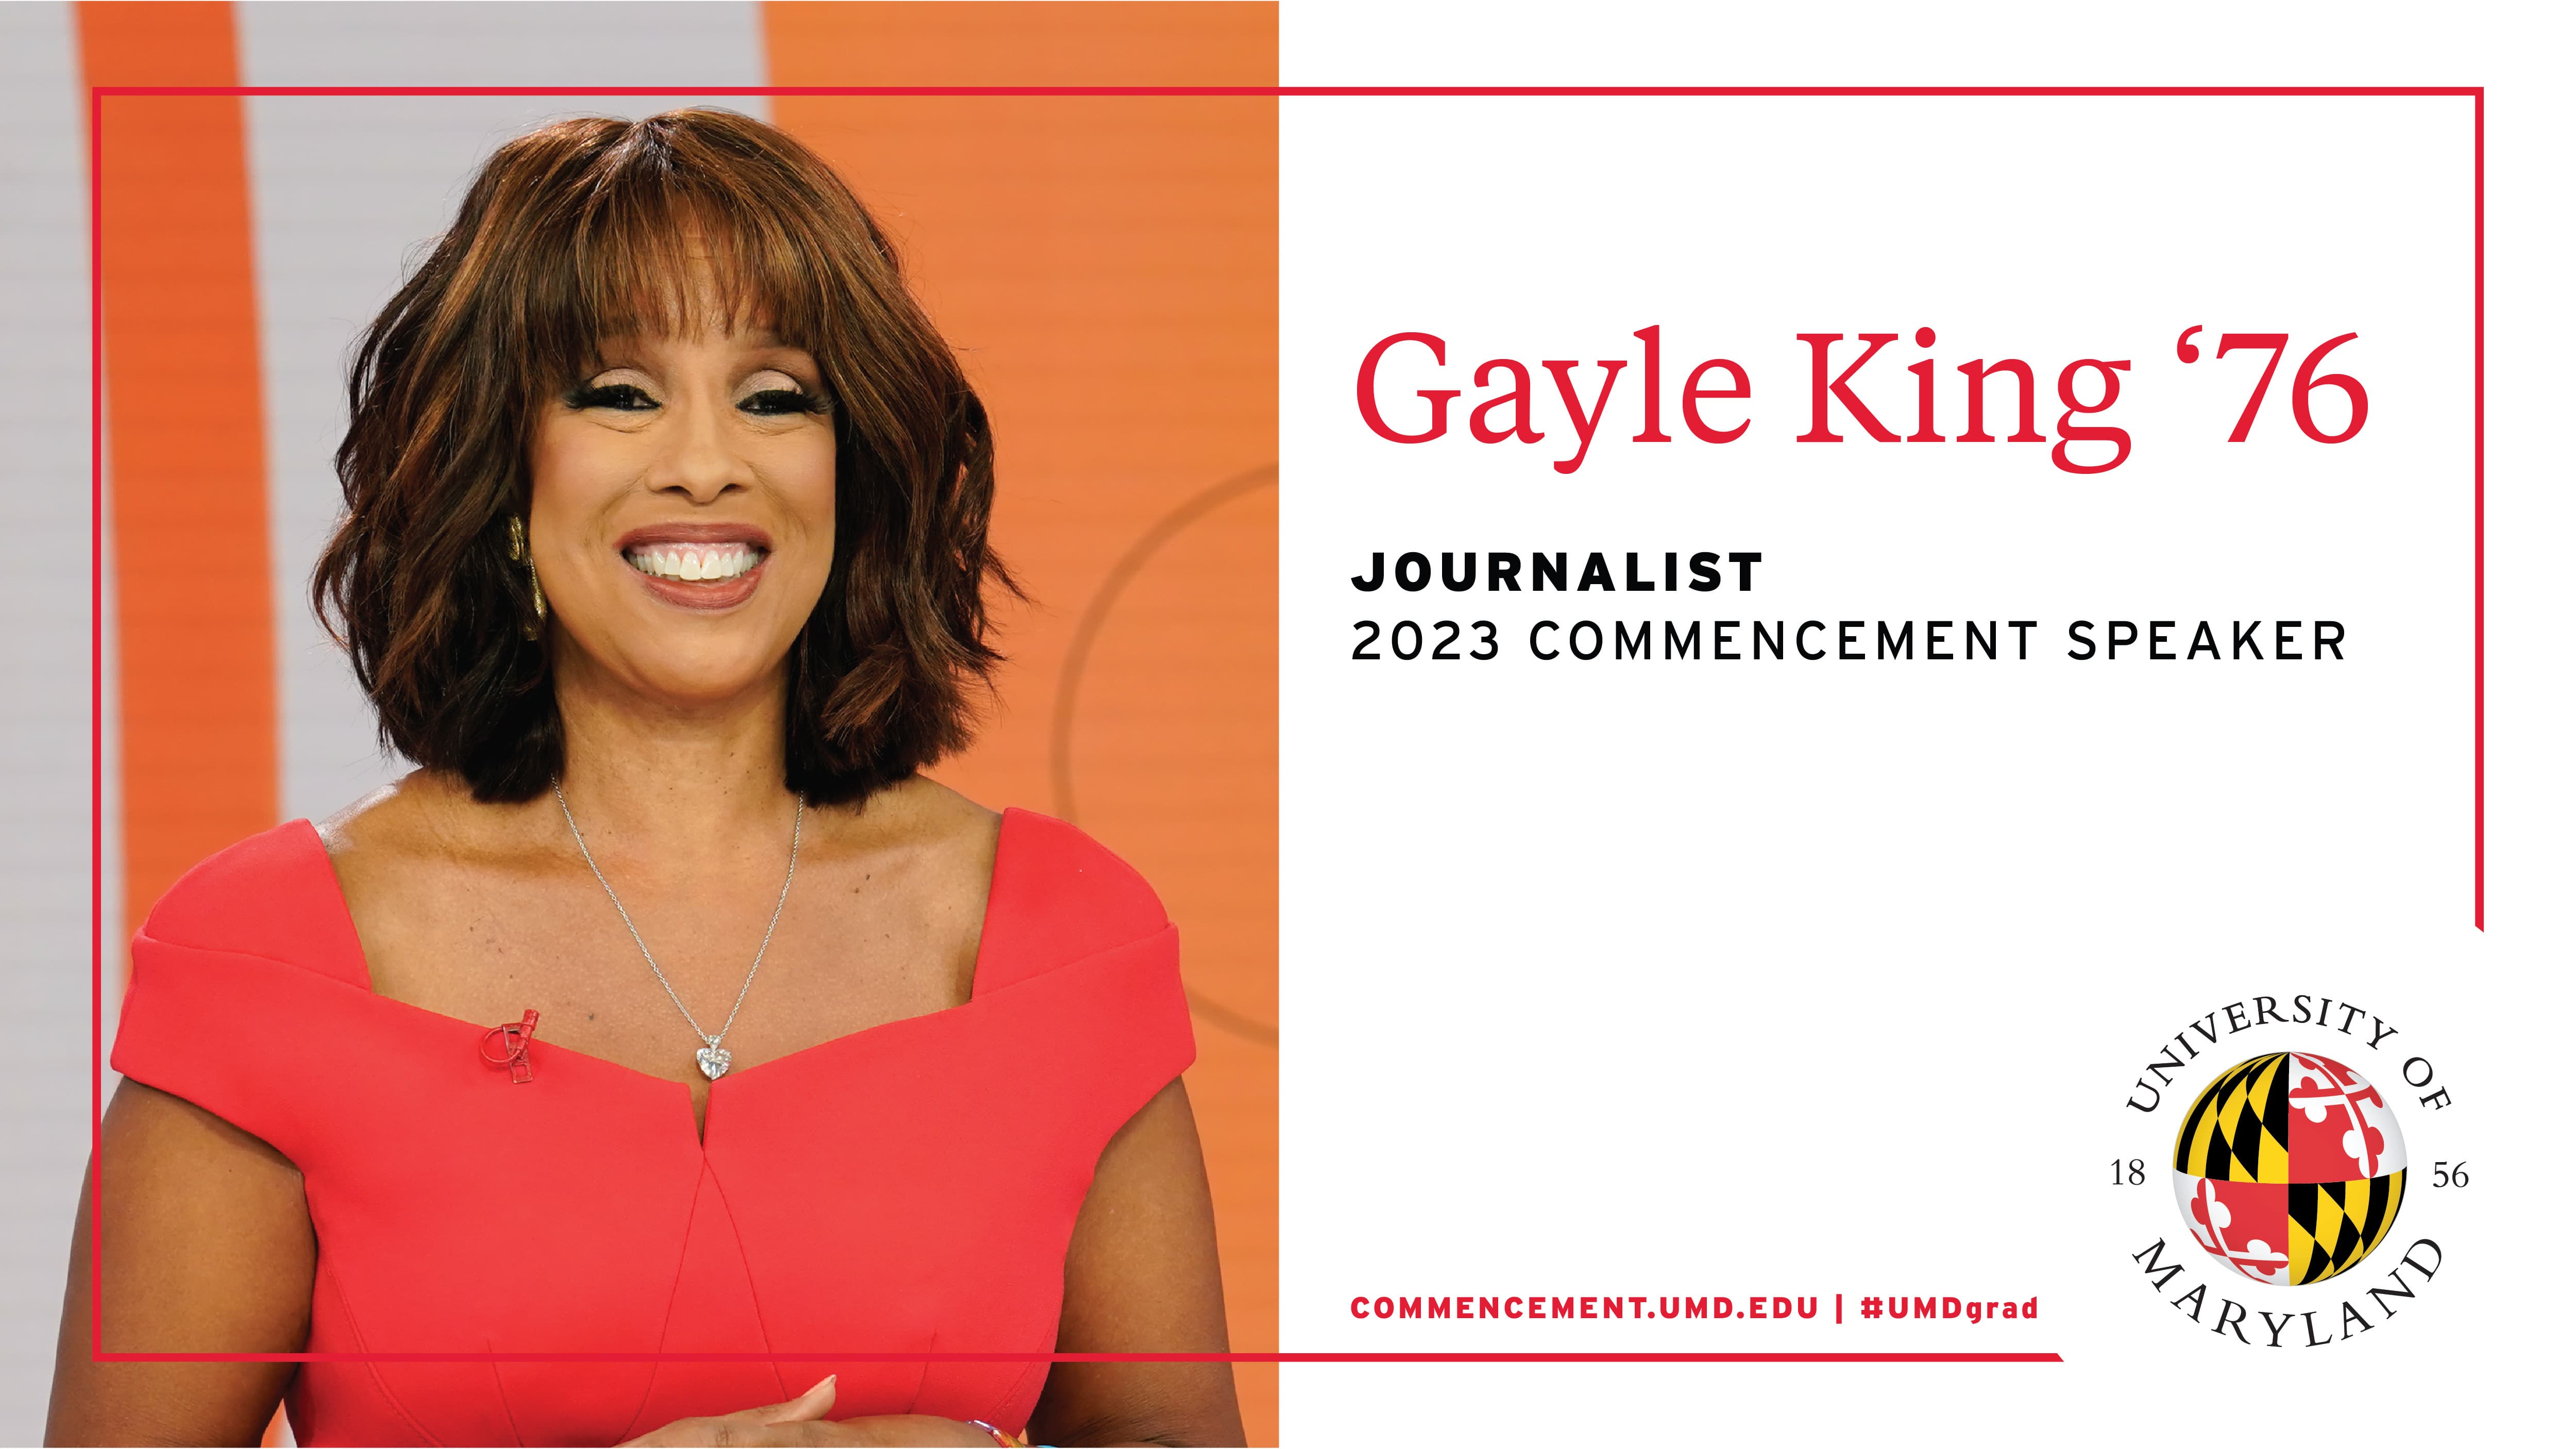 headshot of Gayle King on left | Gayle King '76 | Journalist, 2023 Commencement Speaker | commencement.umd.edu | #UMDgrad | University of Maryland